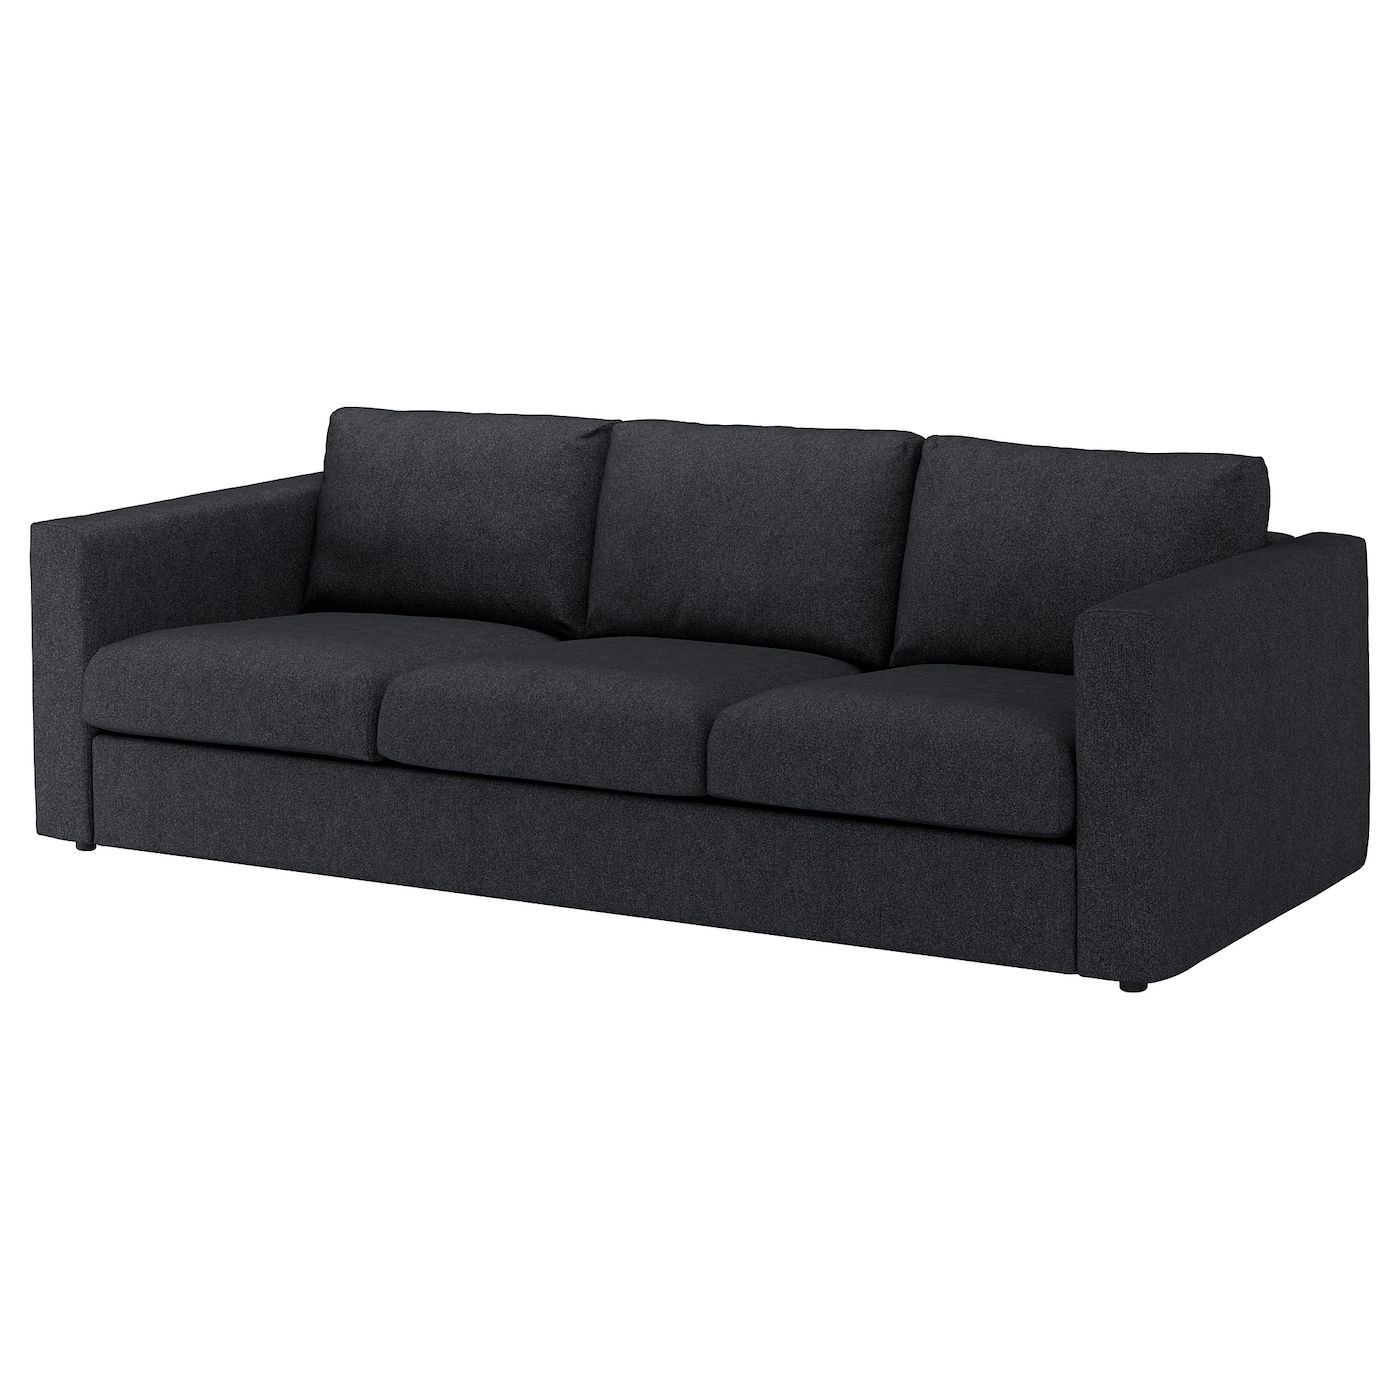 Finnala Sofa, Tallmyra Black/gray – Ikea Intended For Sofas In Black (View 9 of 15)